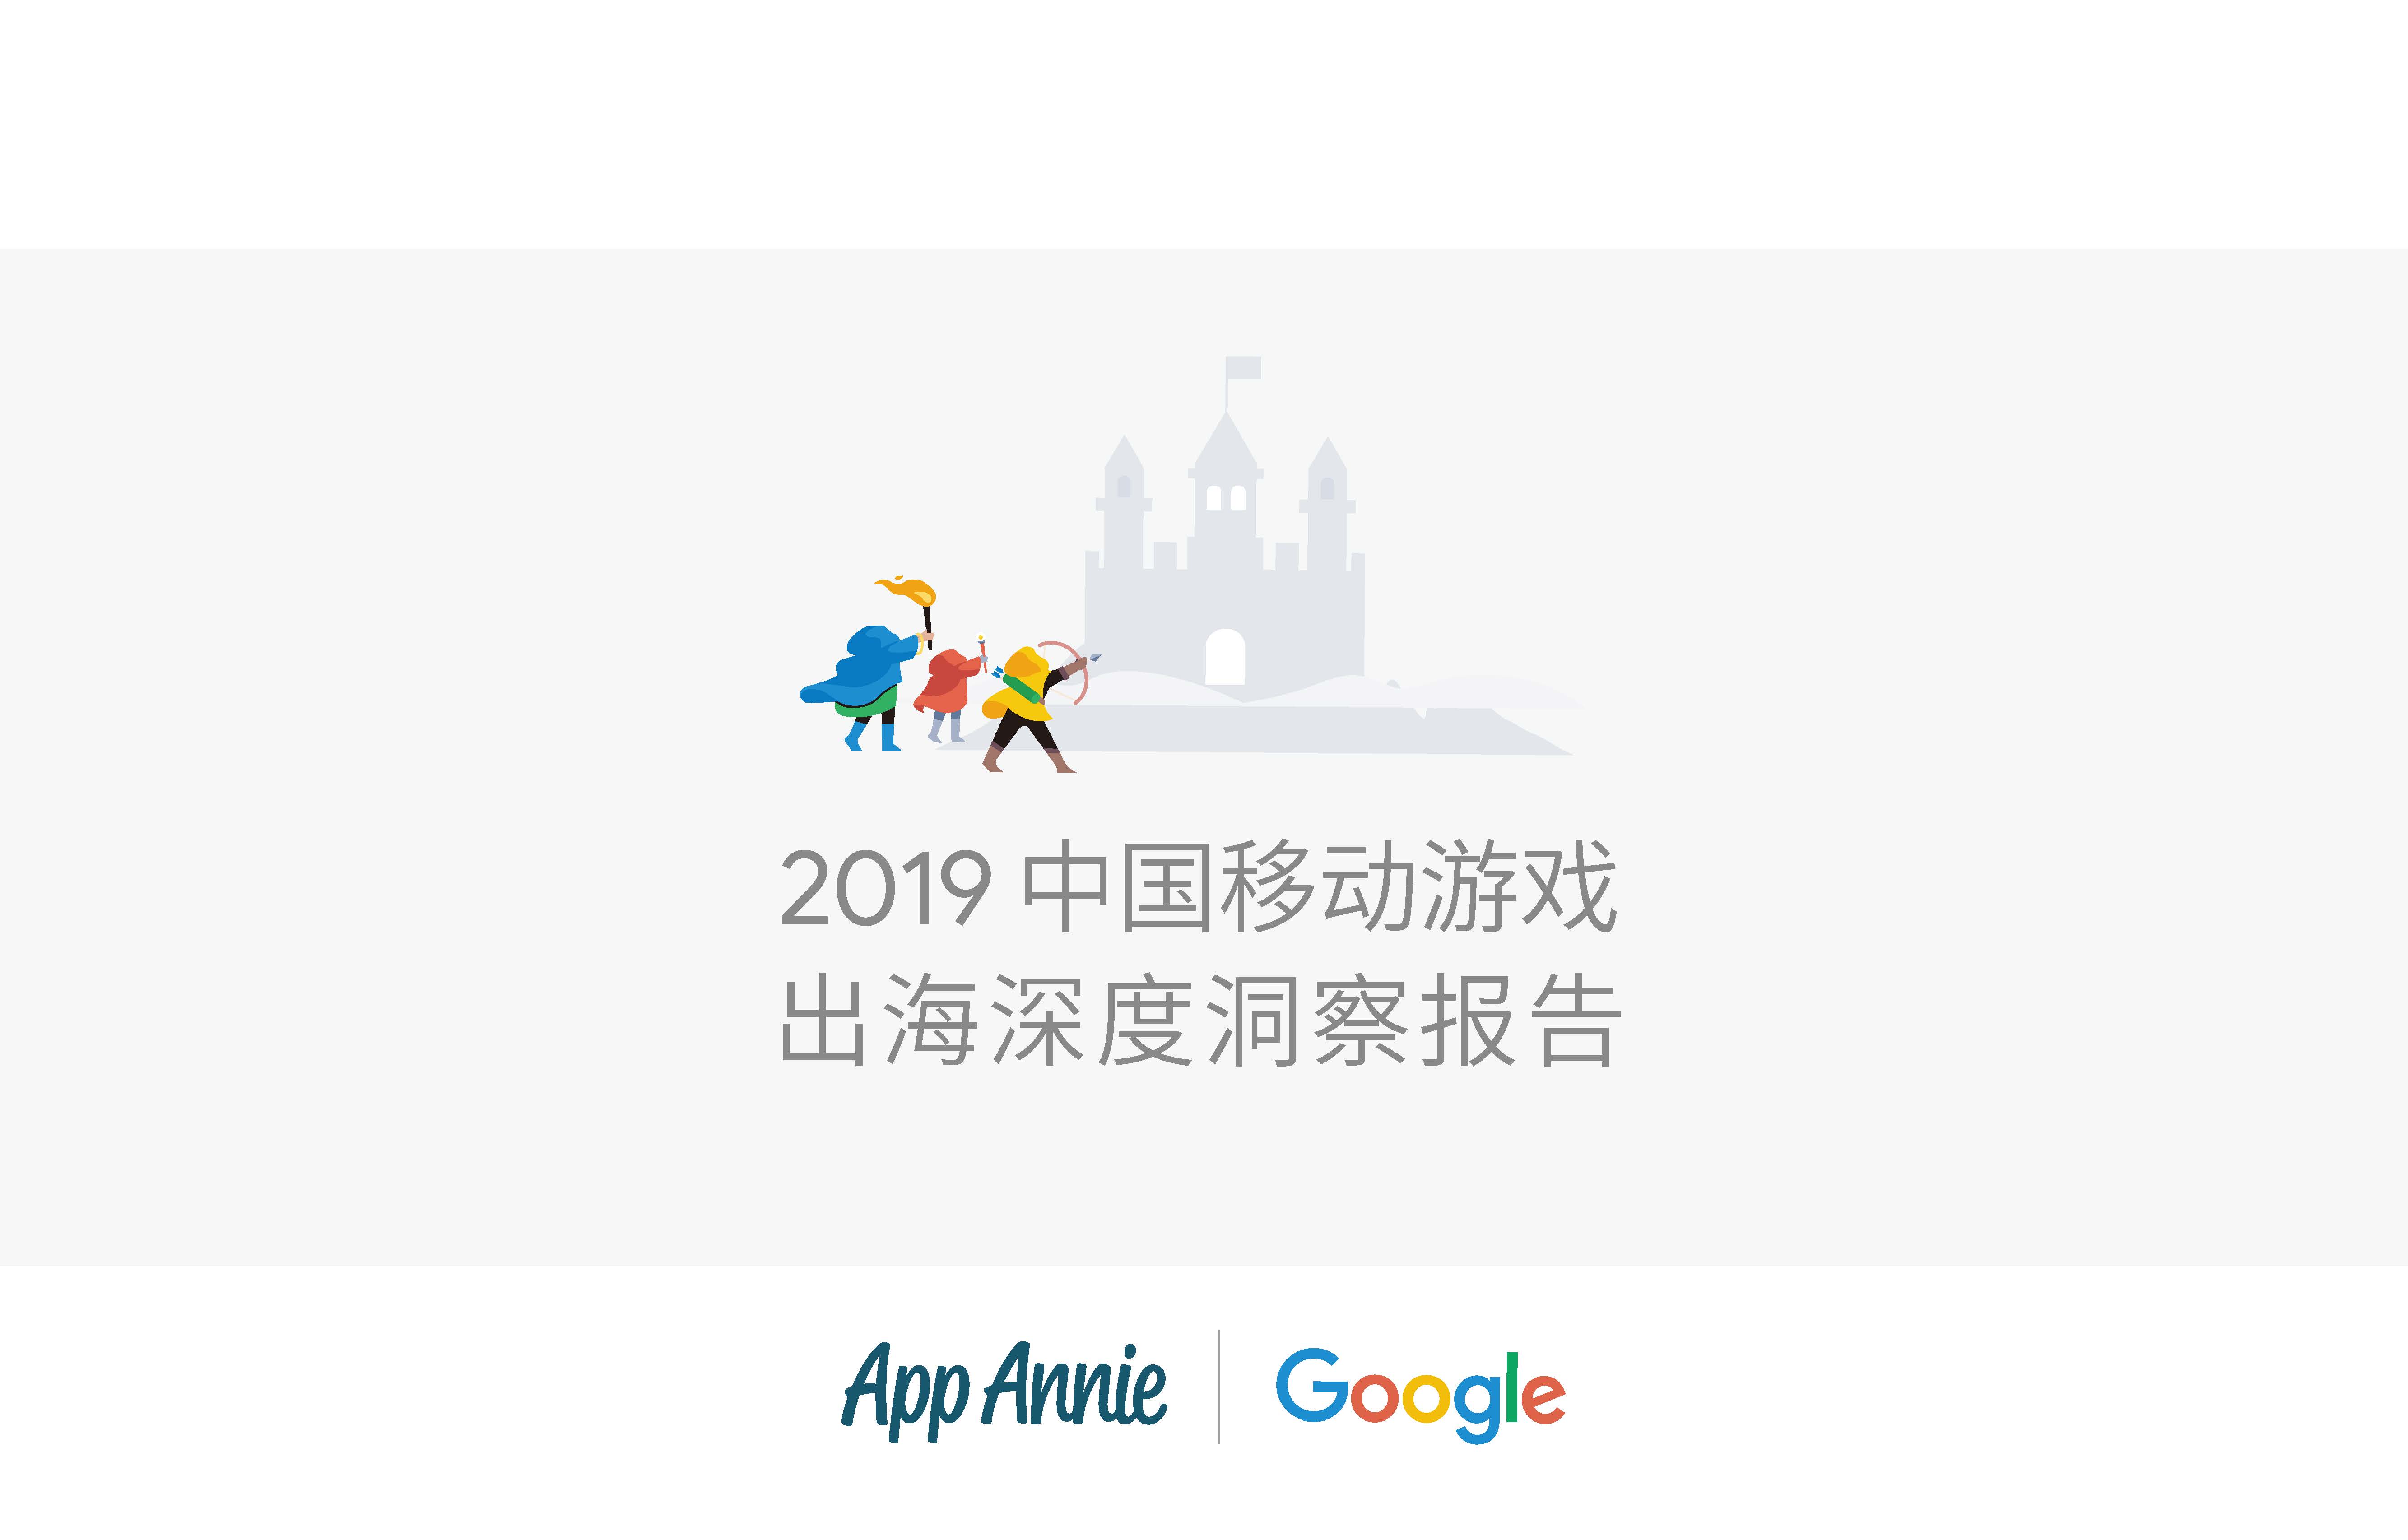 App Annie&Google：2019年中国移动游戏出海深度洞察报告（附下载地址）